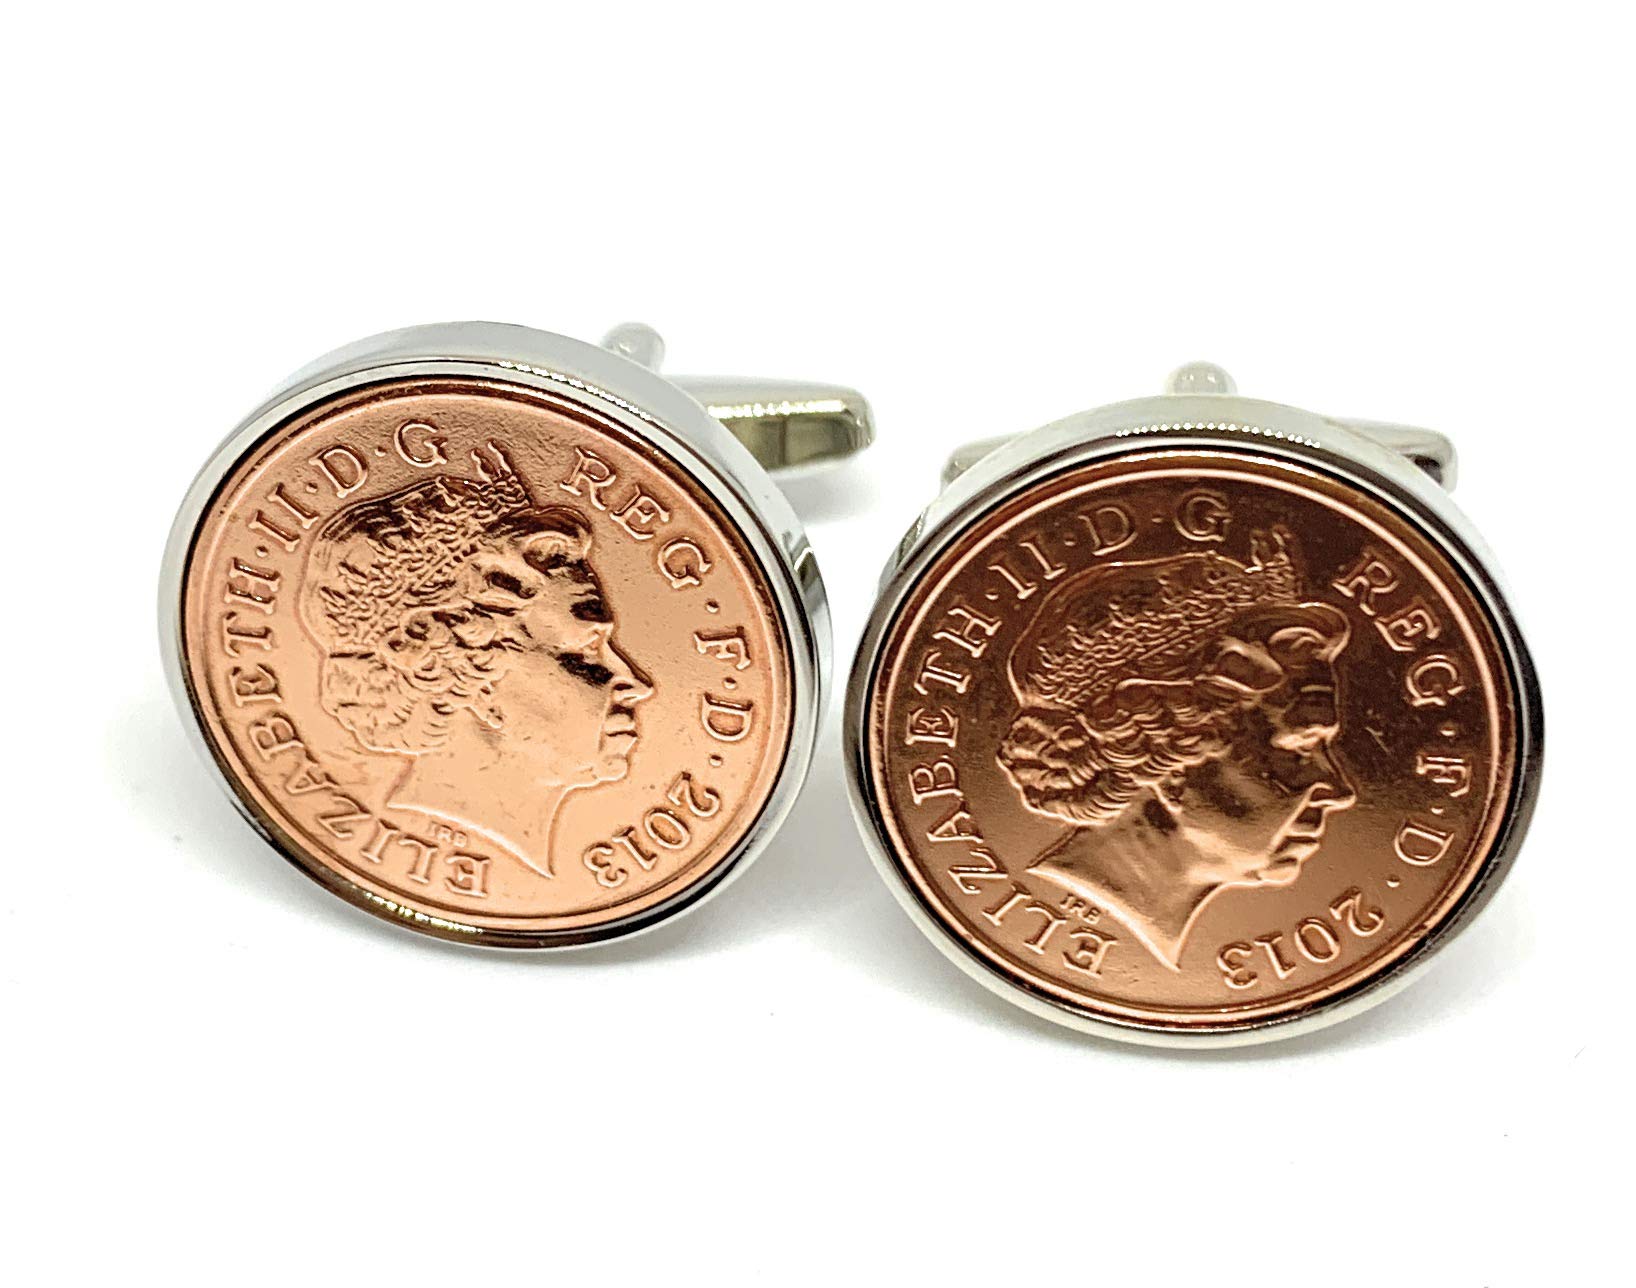 9th Pottery wedding Anniversary 9 year Pottery birthday / Anniversary 2013 Coin cufflinks Premium